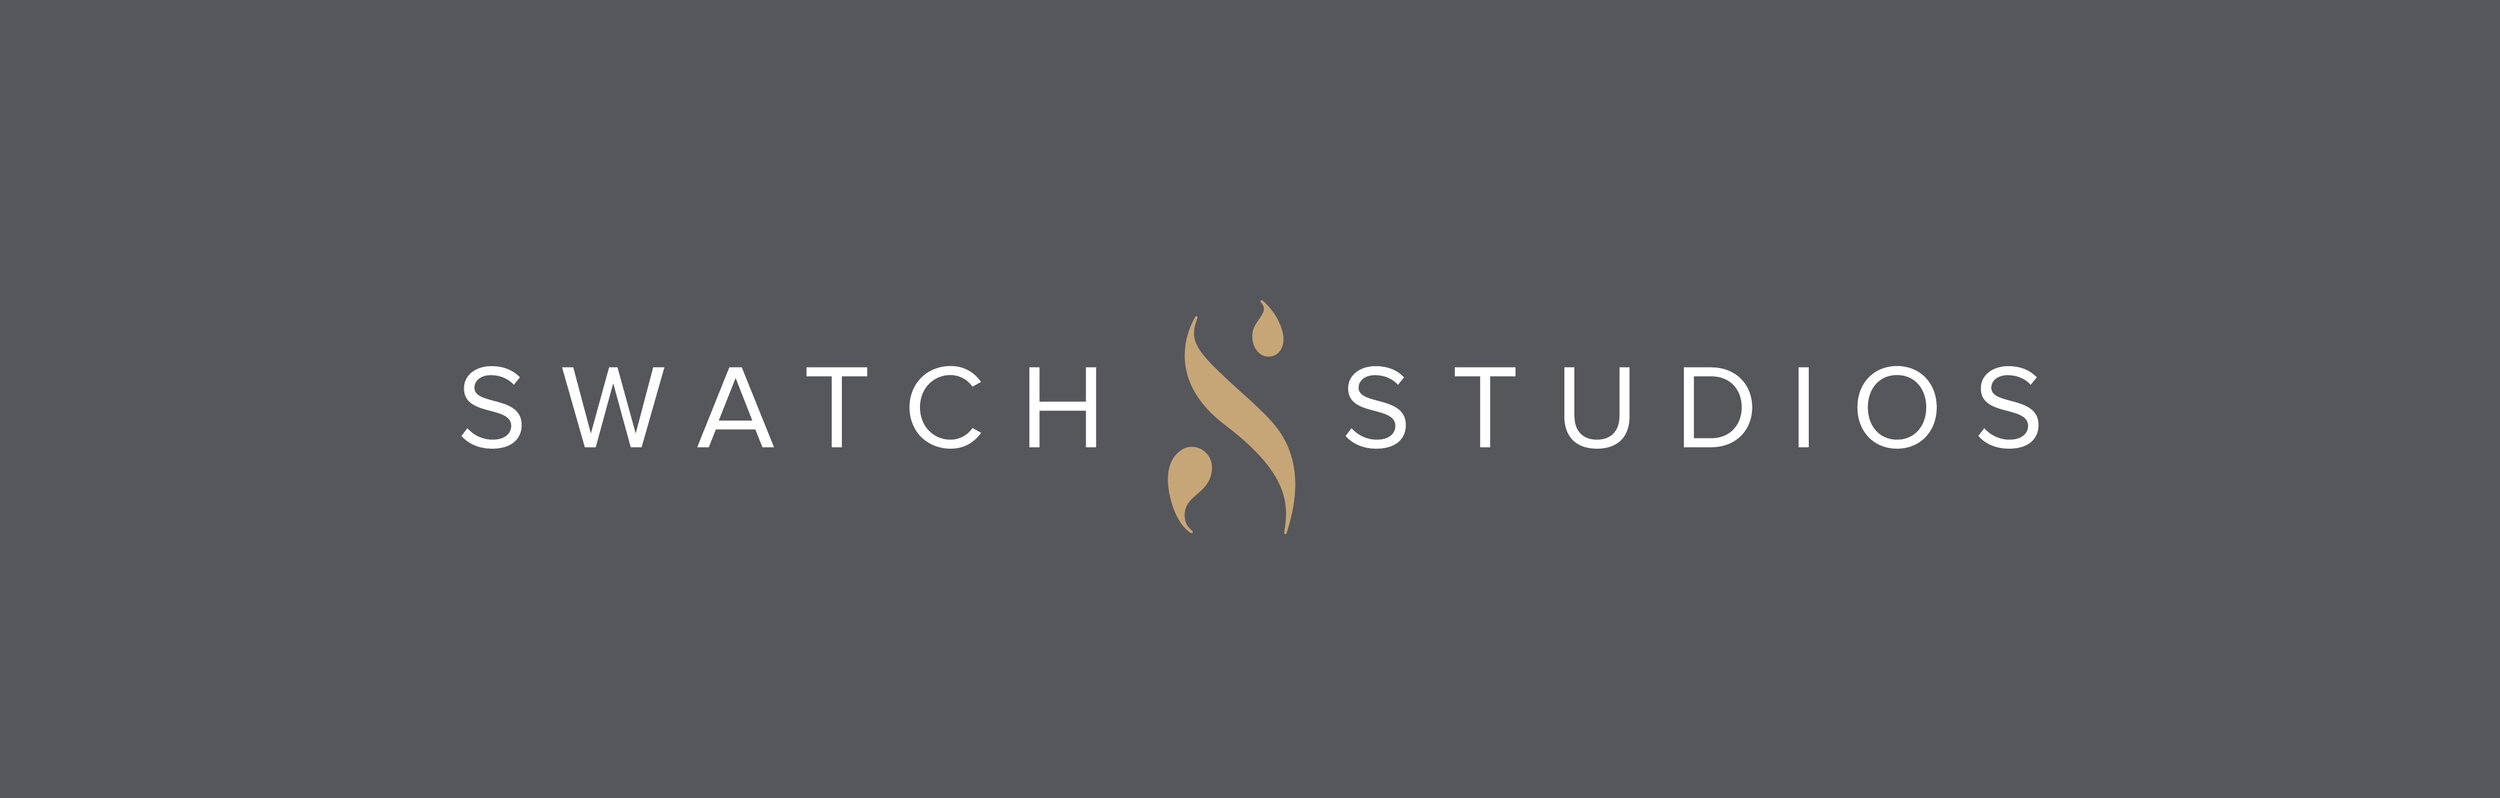 Swatch Studios_3.jpg